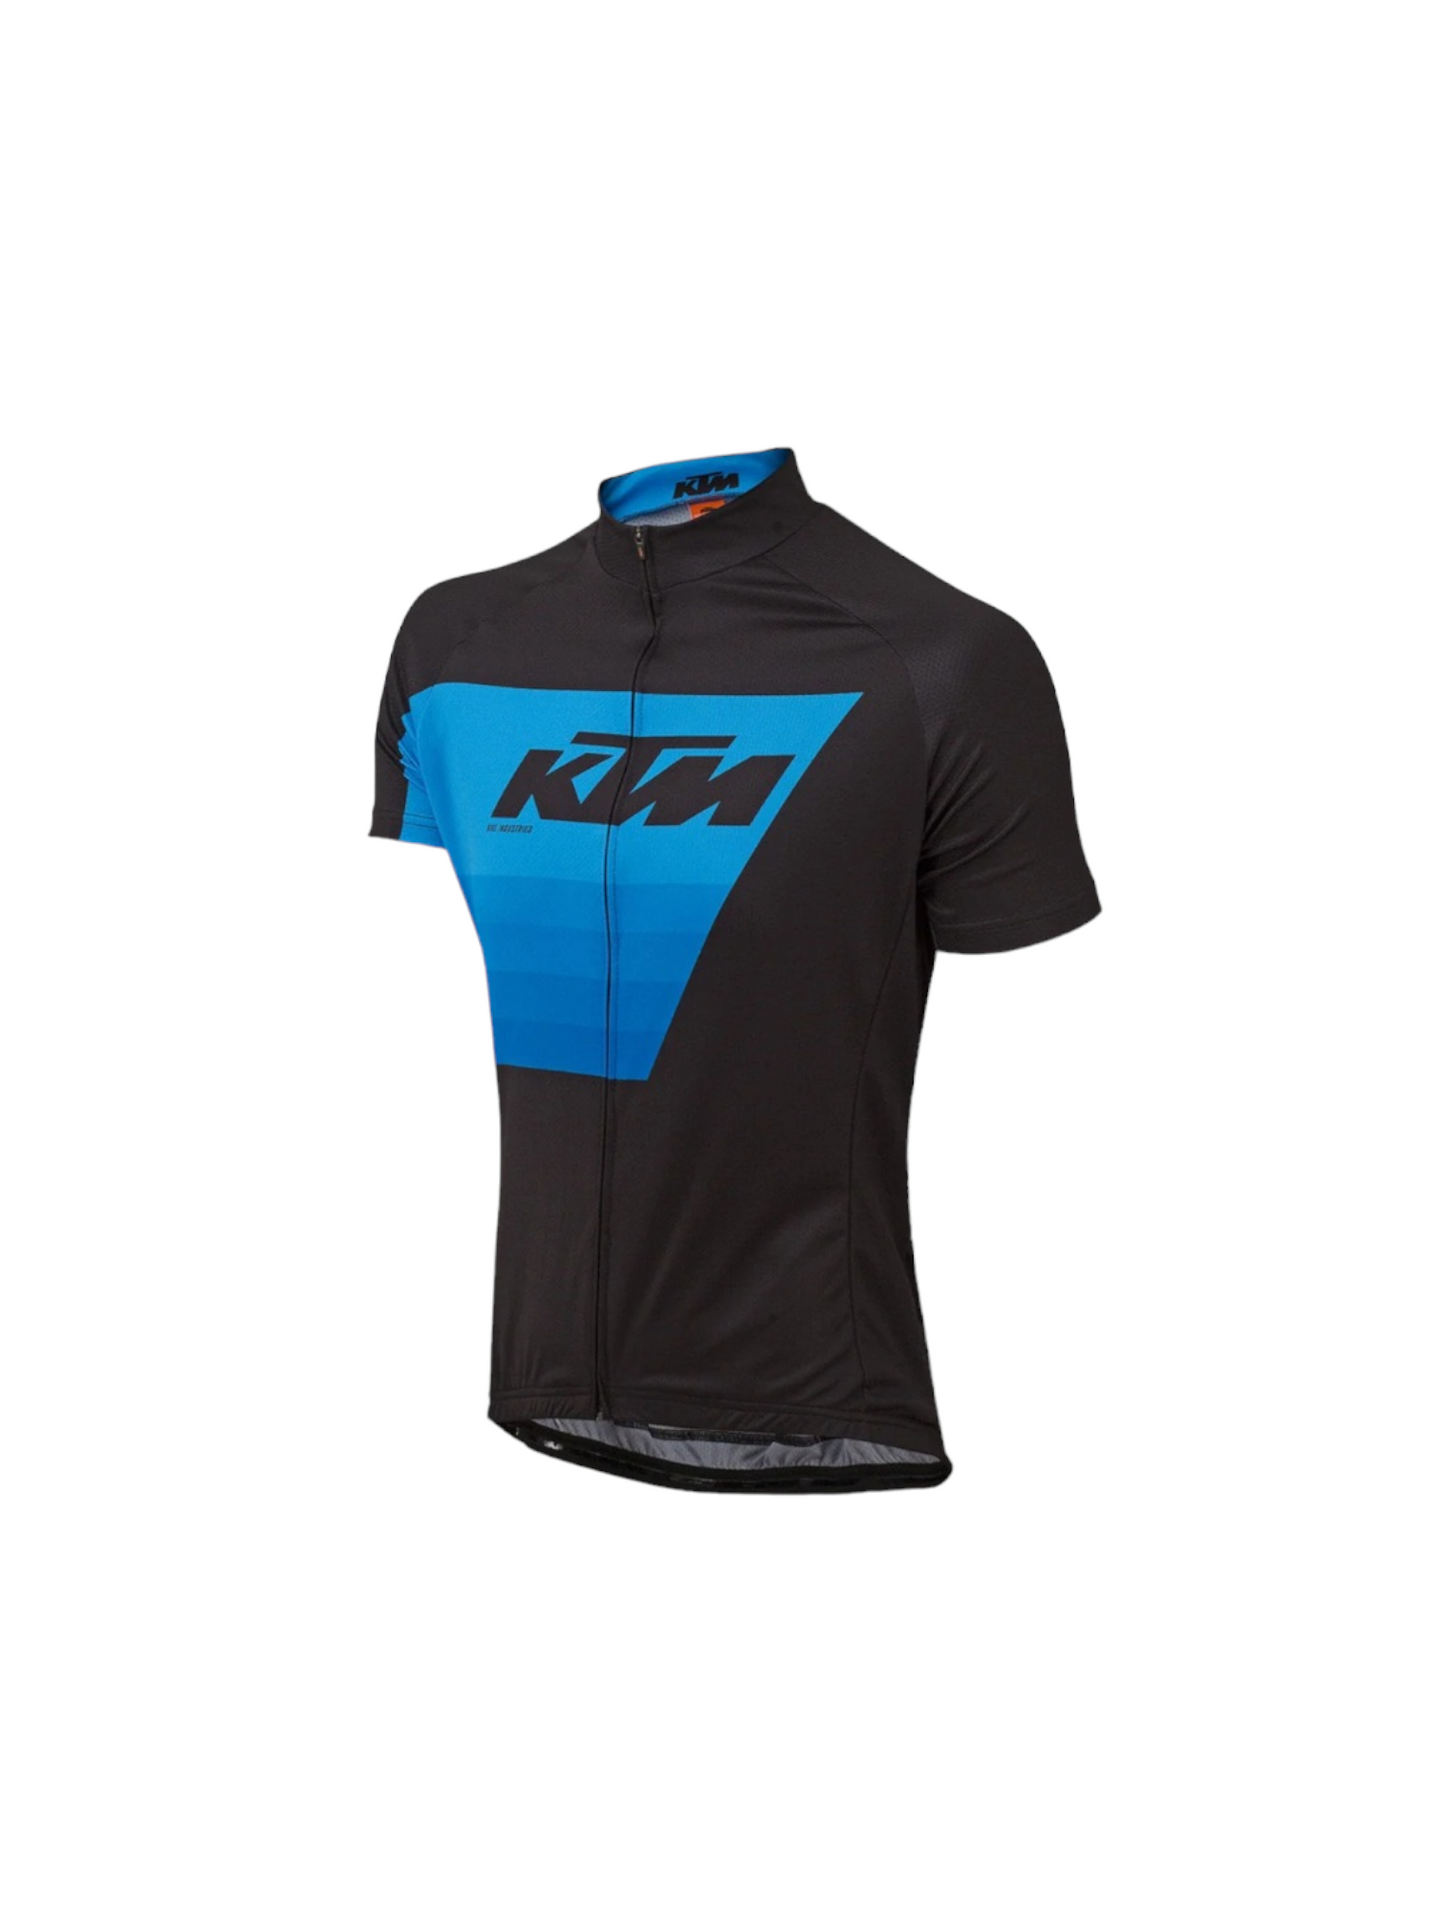 Jersey ciclismo KTM manga corta Factory Line negro/azul